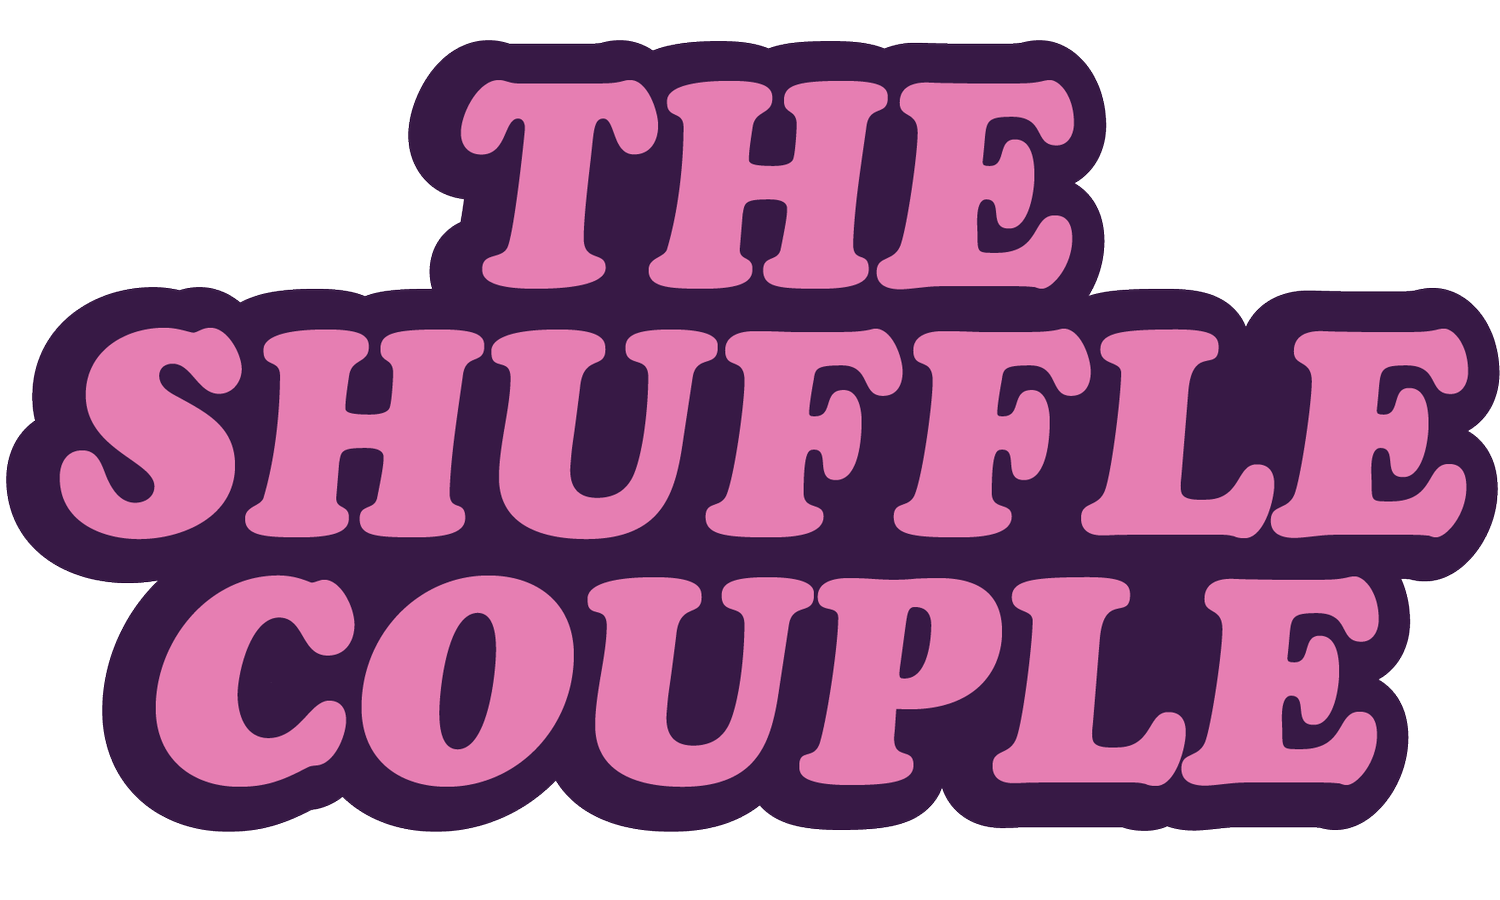 The Shuffle Couple